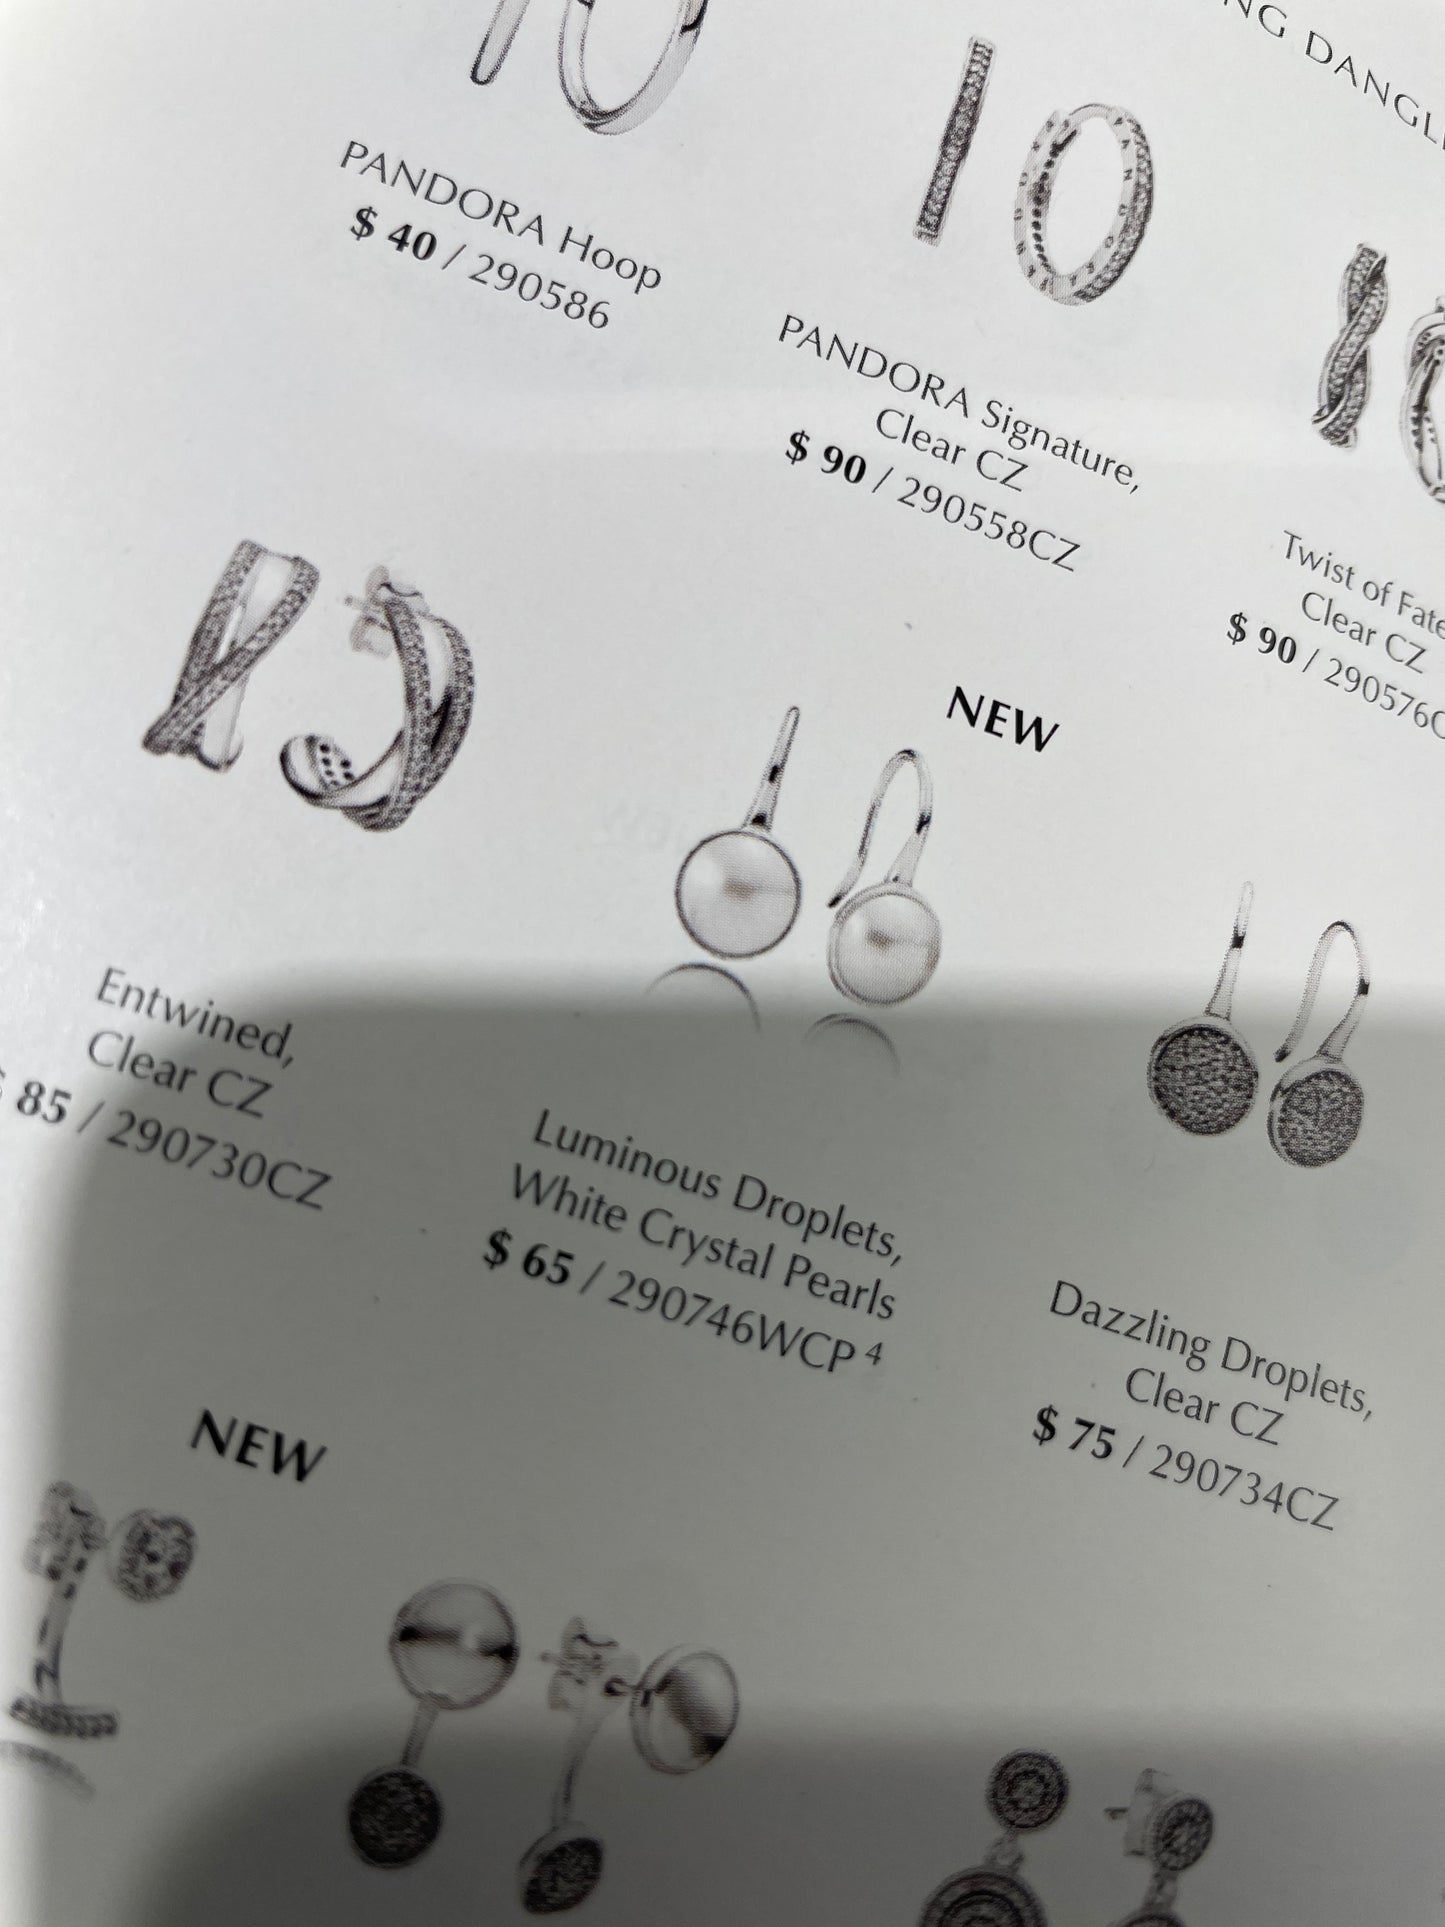 Retired Pandora Luminous Droplets White Crystal Pearl Earrings 290746WCP